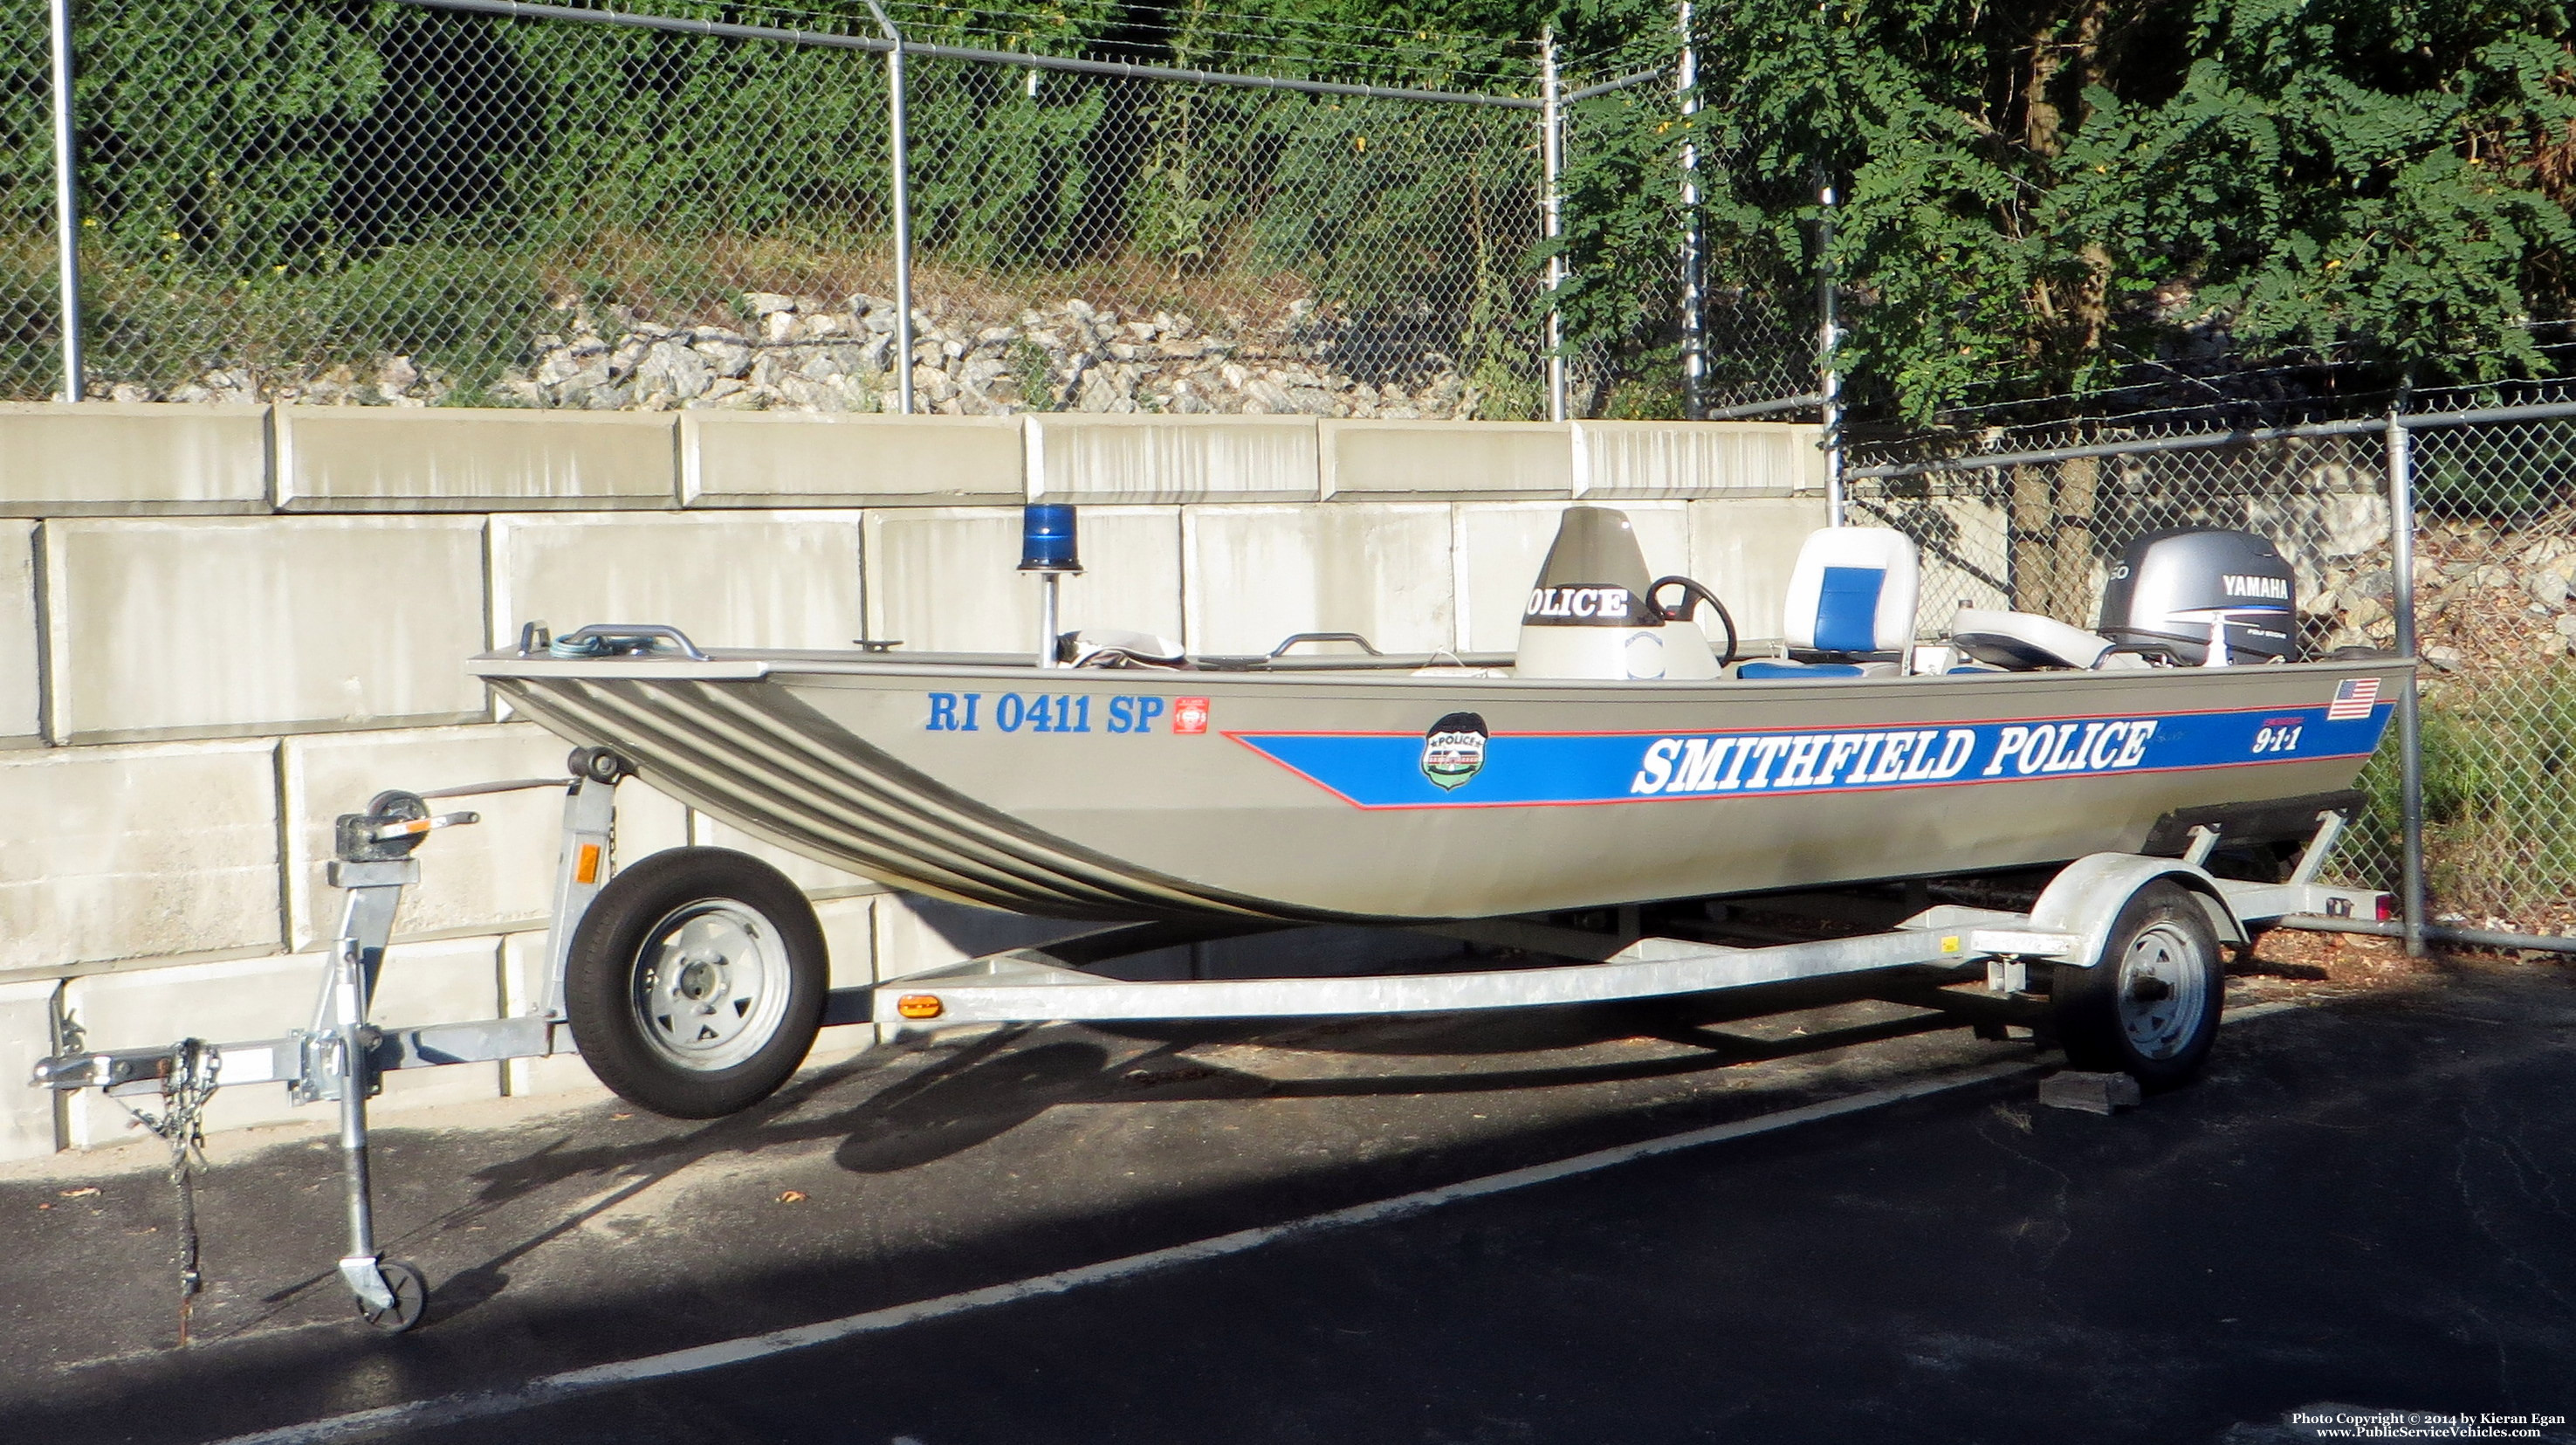 A photo  of Smithfield Police
            Boat, a 1990-2014 Marine Unit             taken by Kieran Egan